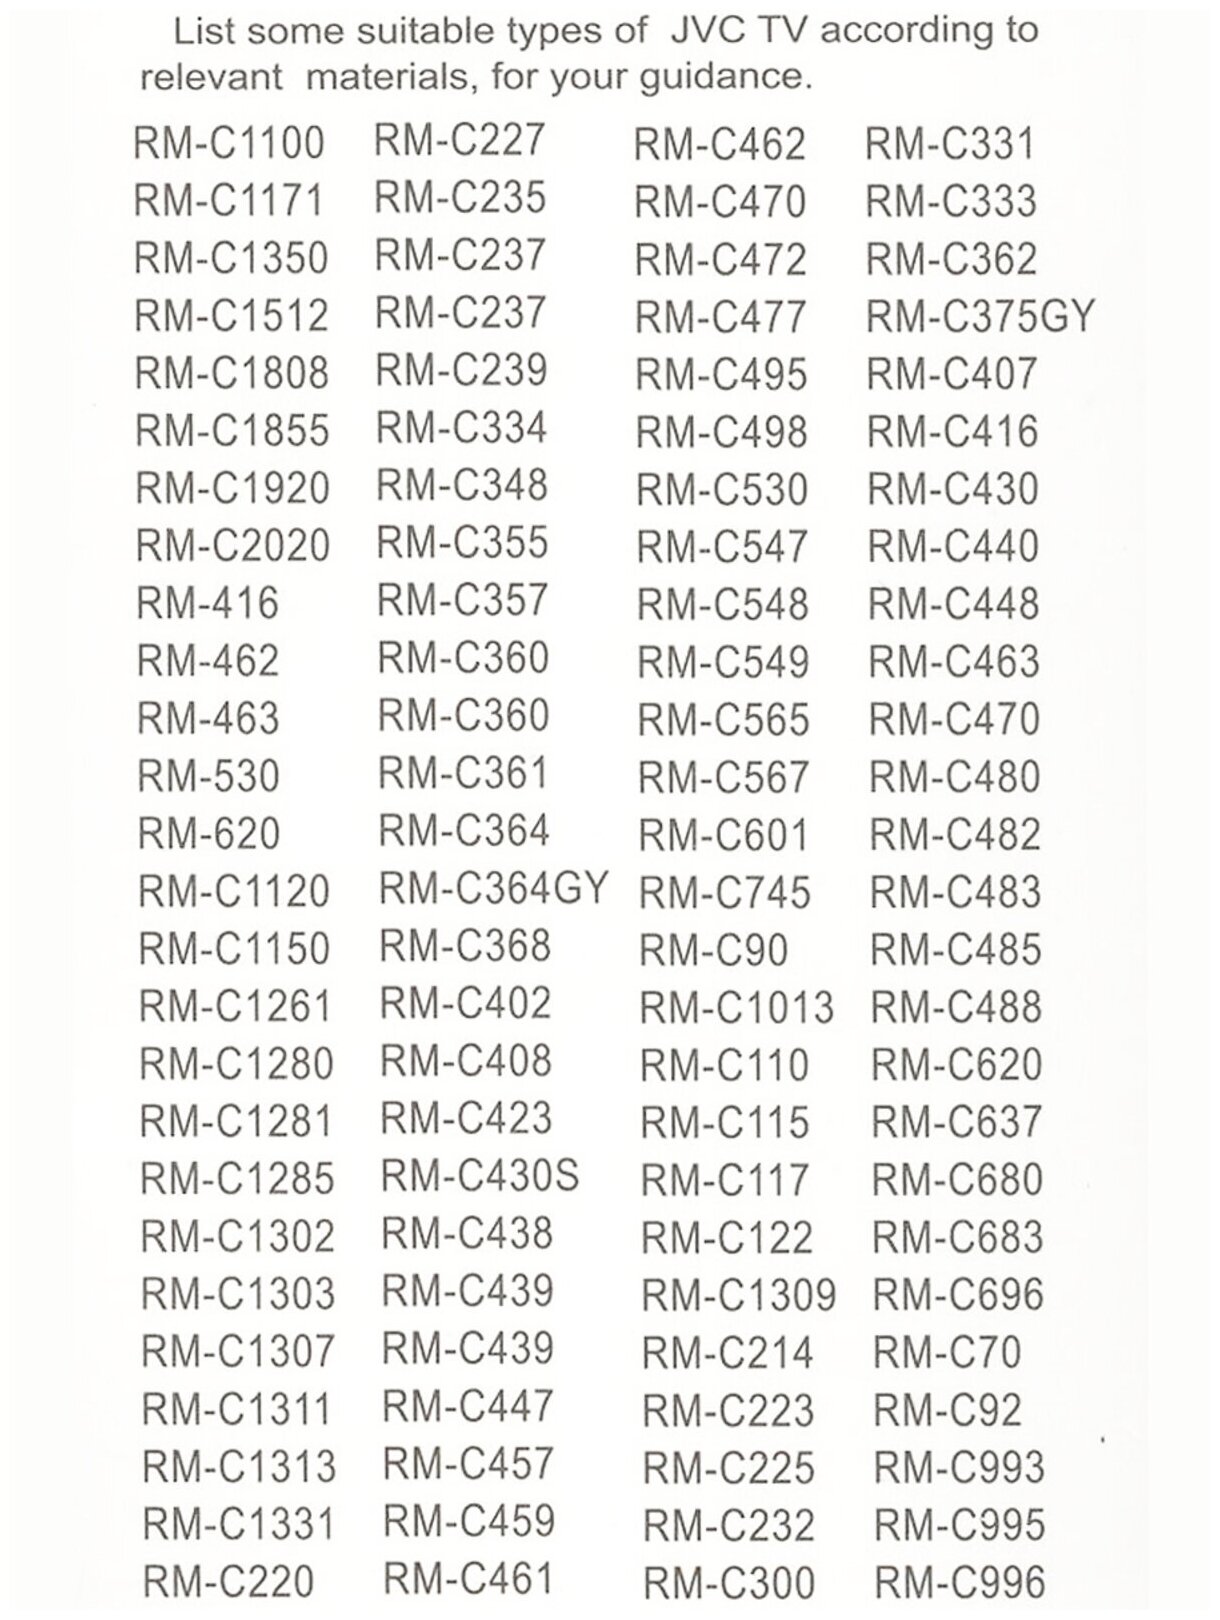 Пульт Huayu для JVC RM-530F